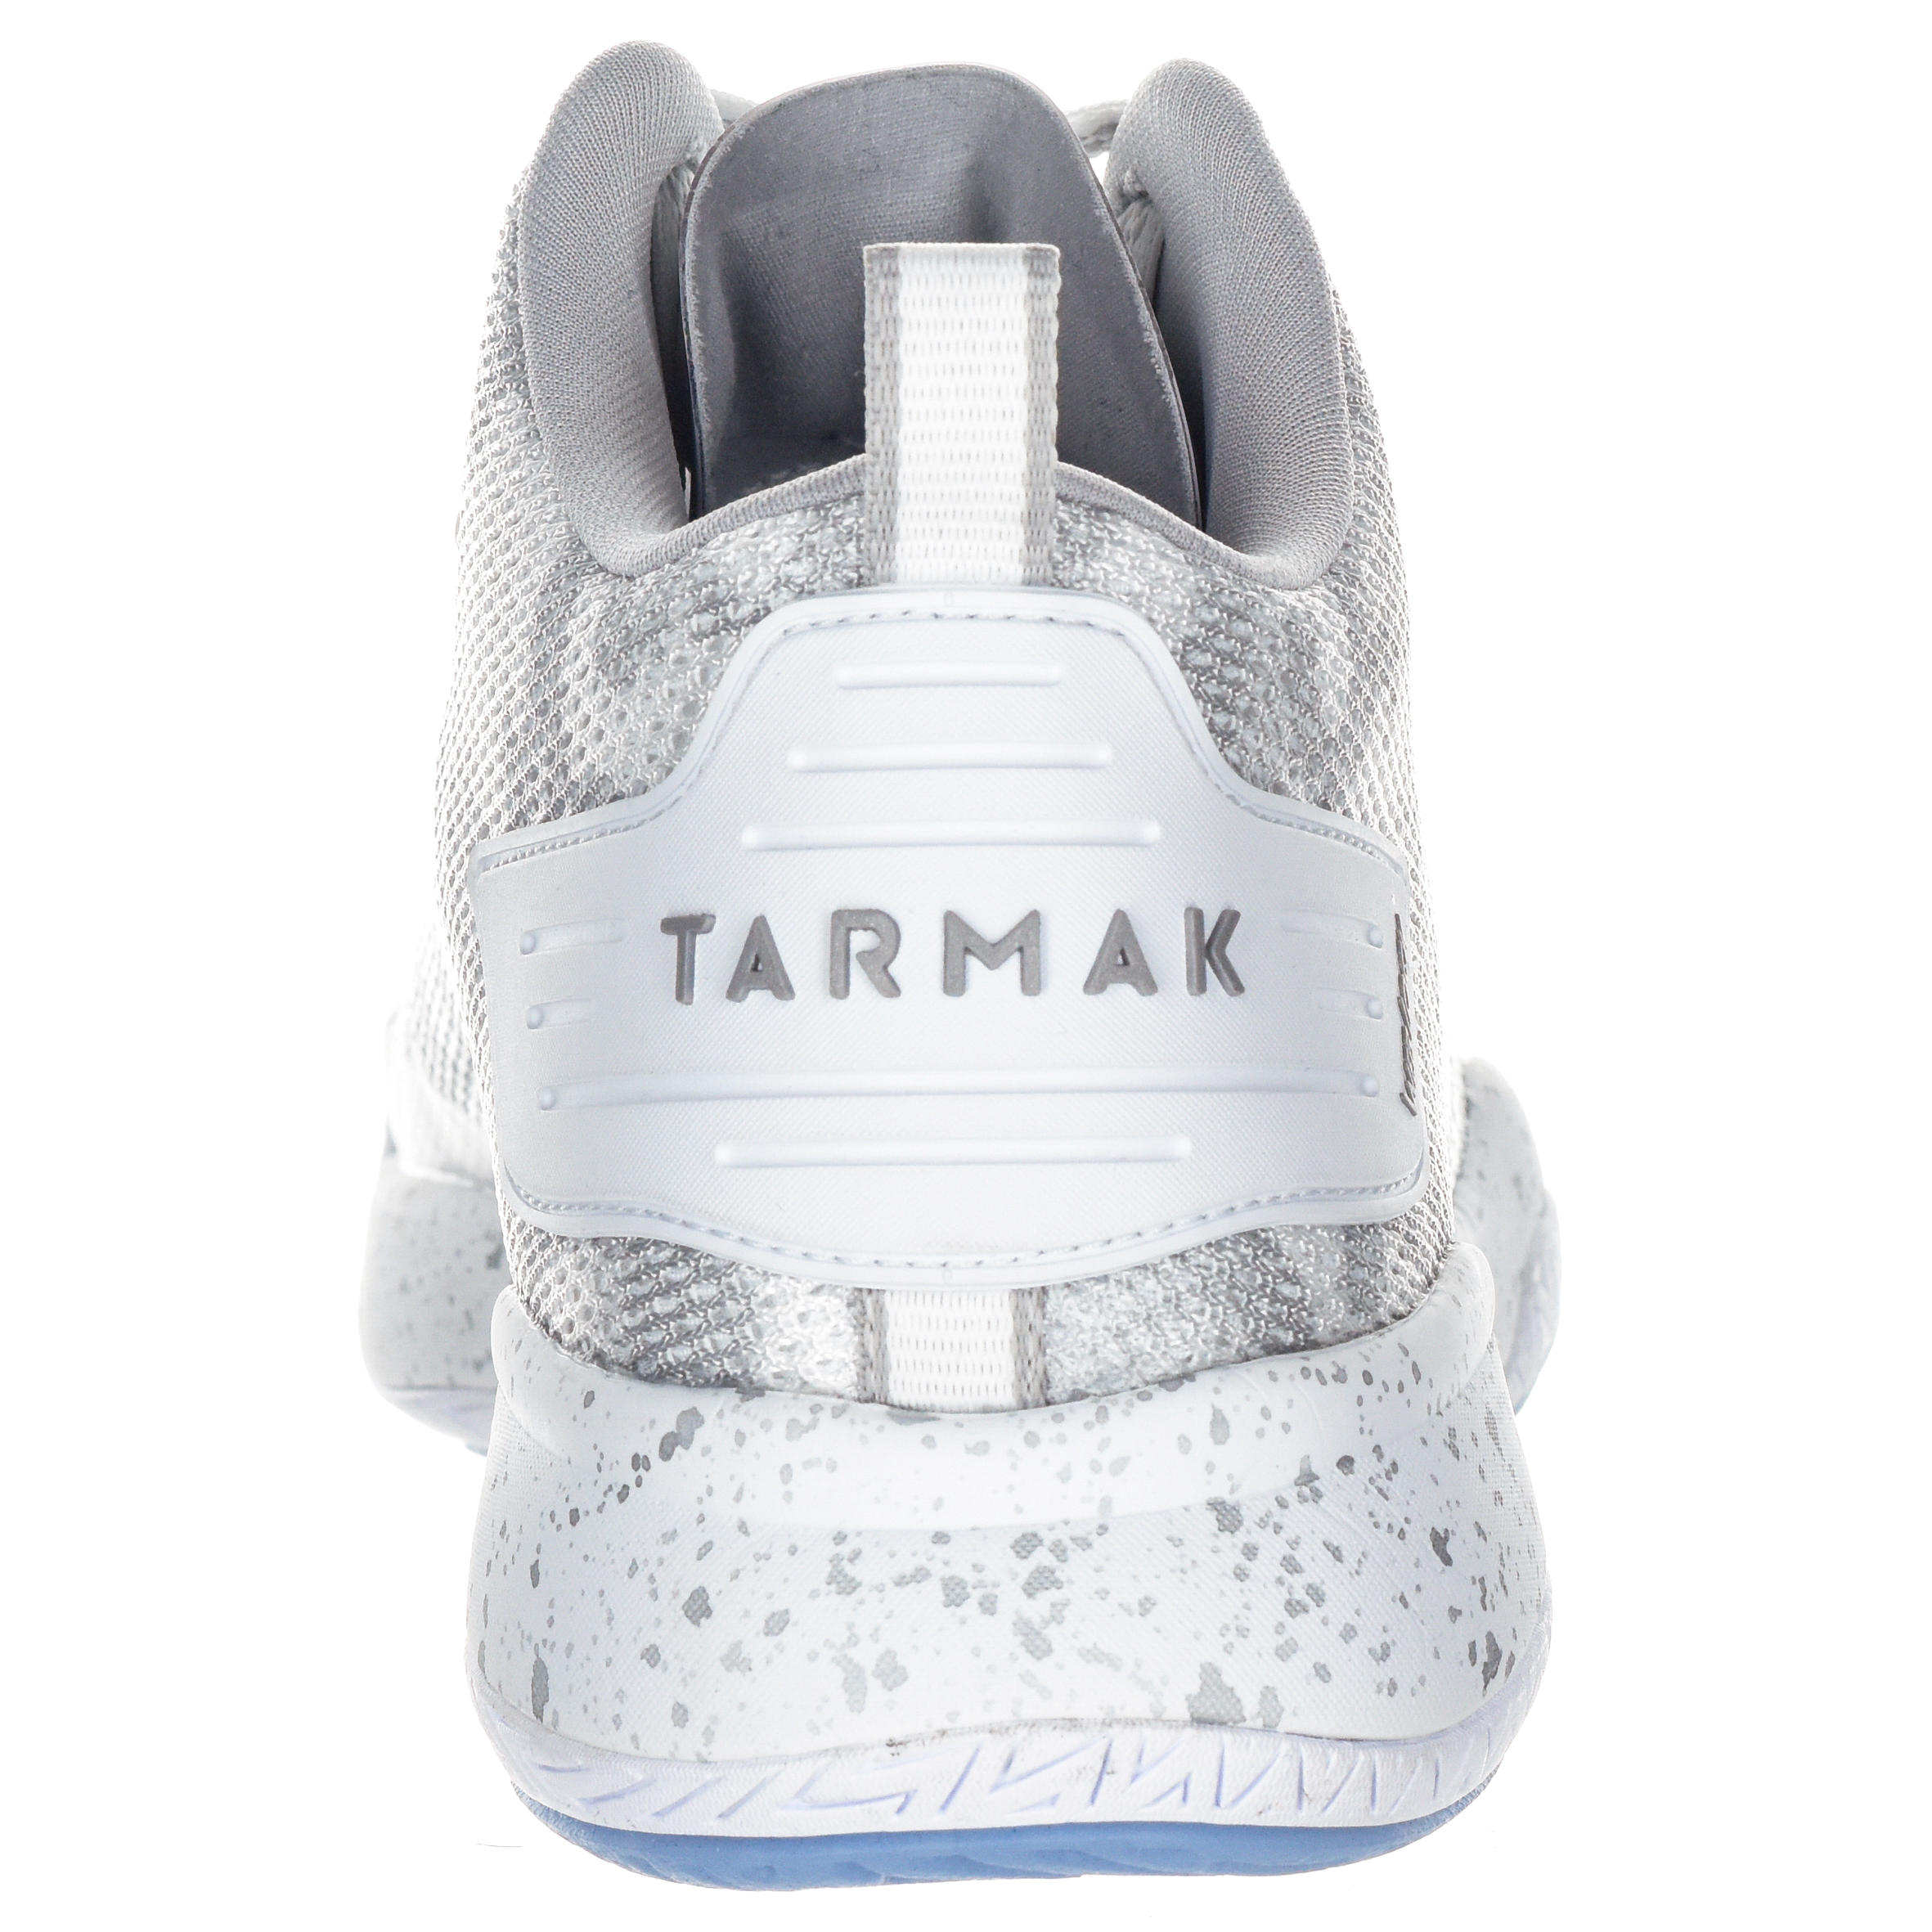 tarmak basketball shoes review